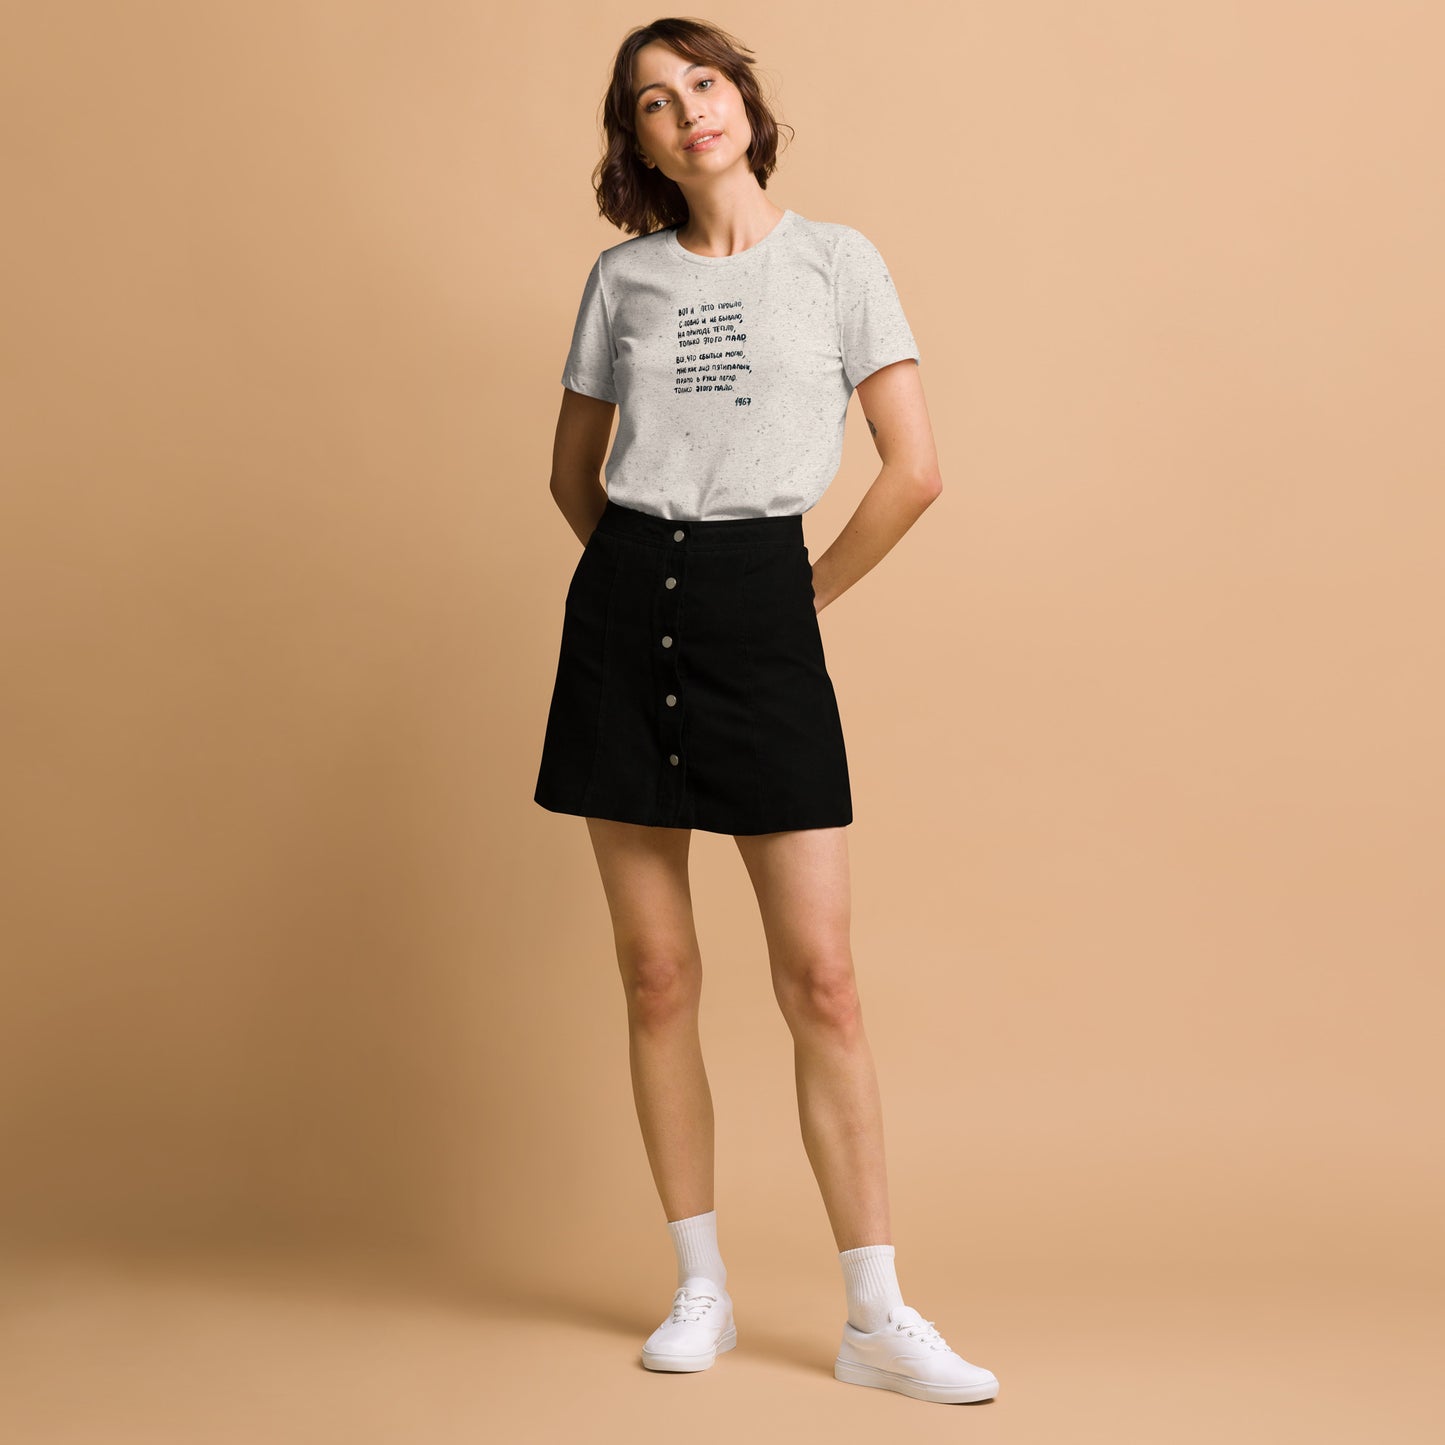 Arseny Tarkovky Poem Women’s relaxed tri-blend t-shirt